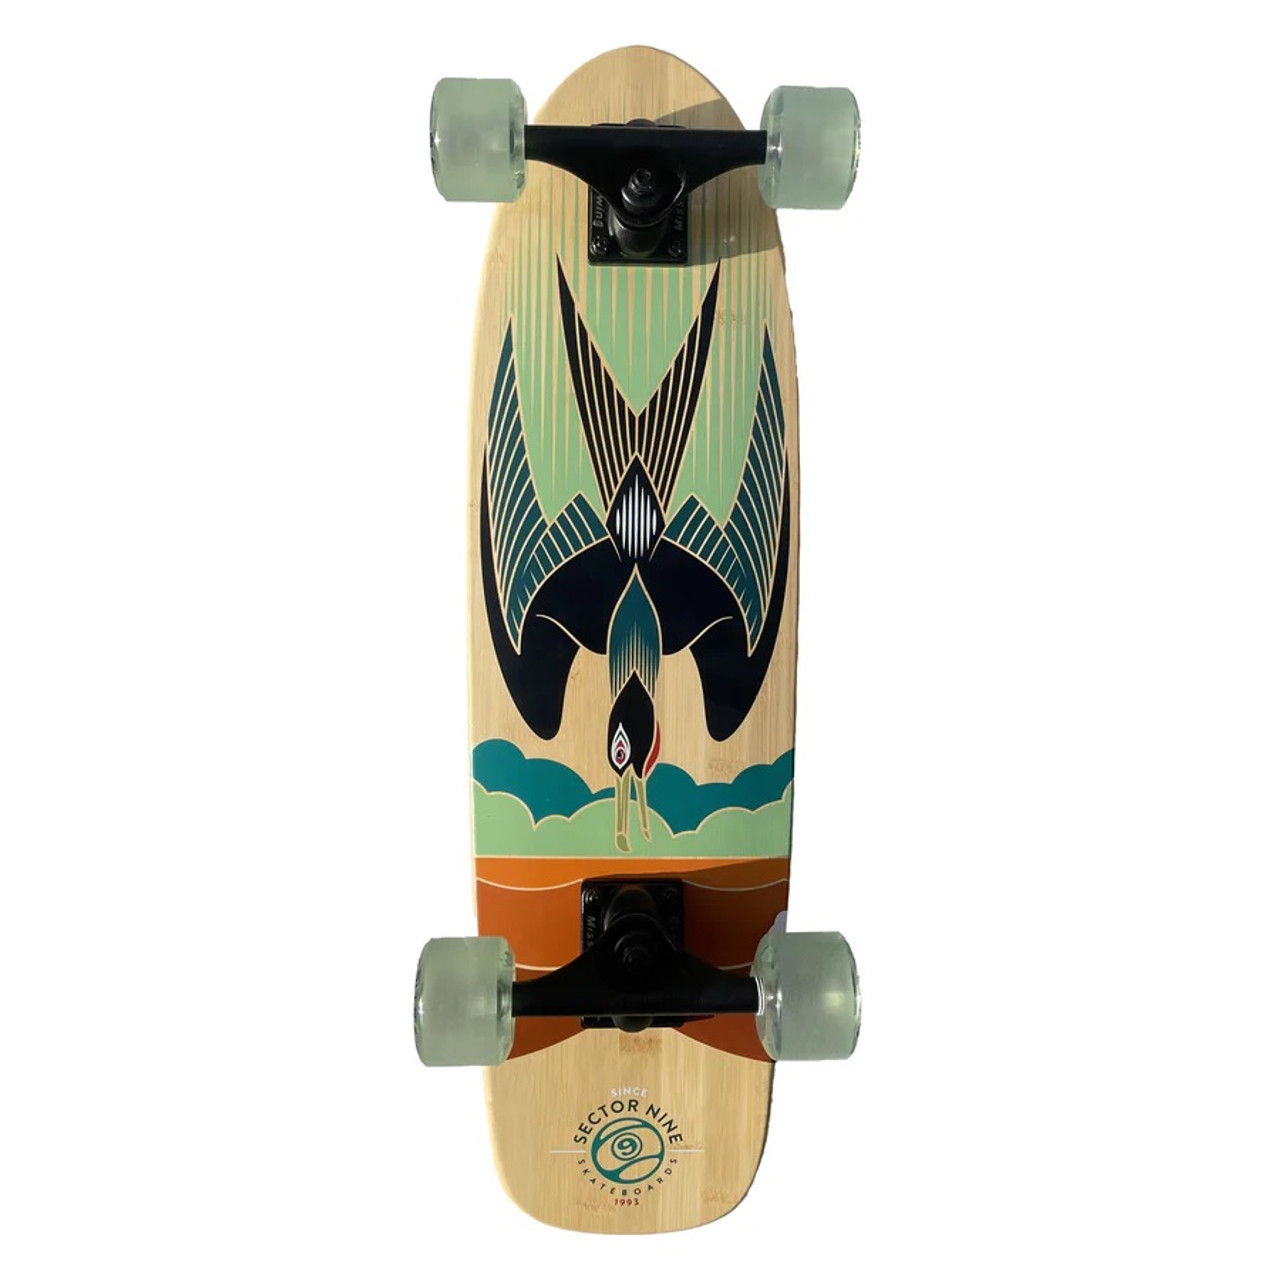 Sector 9 Bambino Raider Skateboard Complete Teal Blue 7.5x26.5